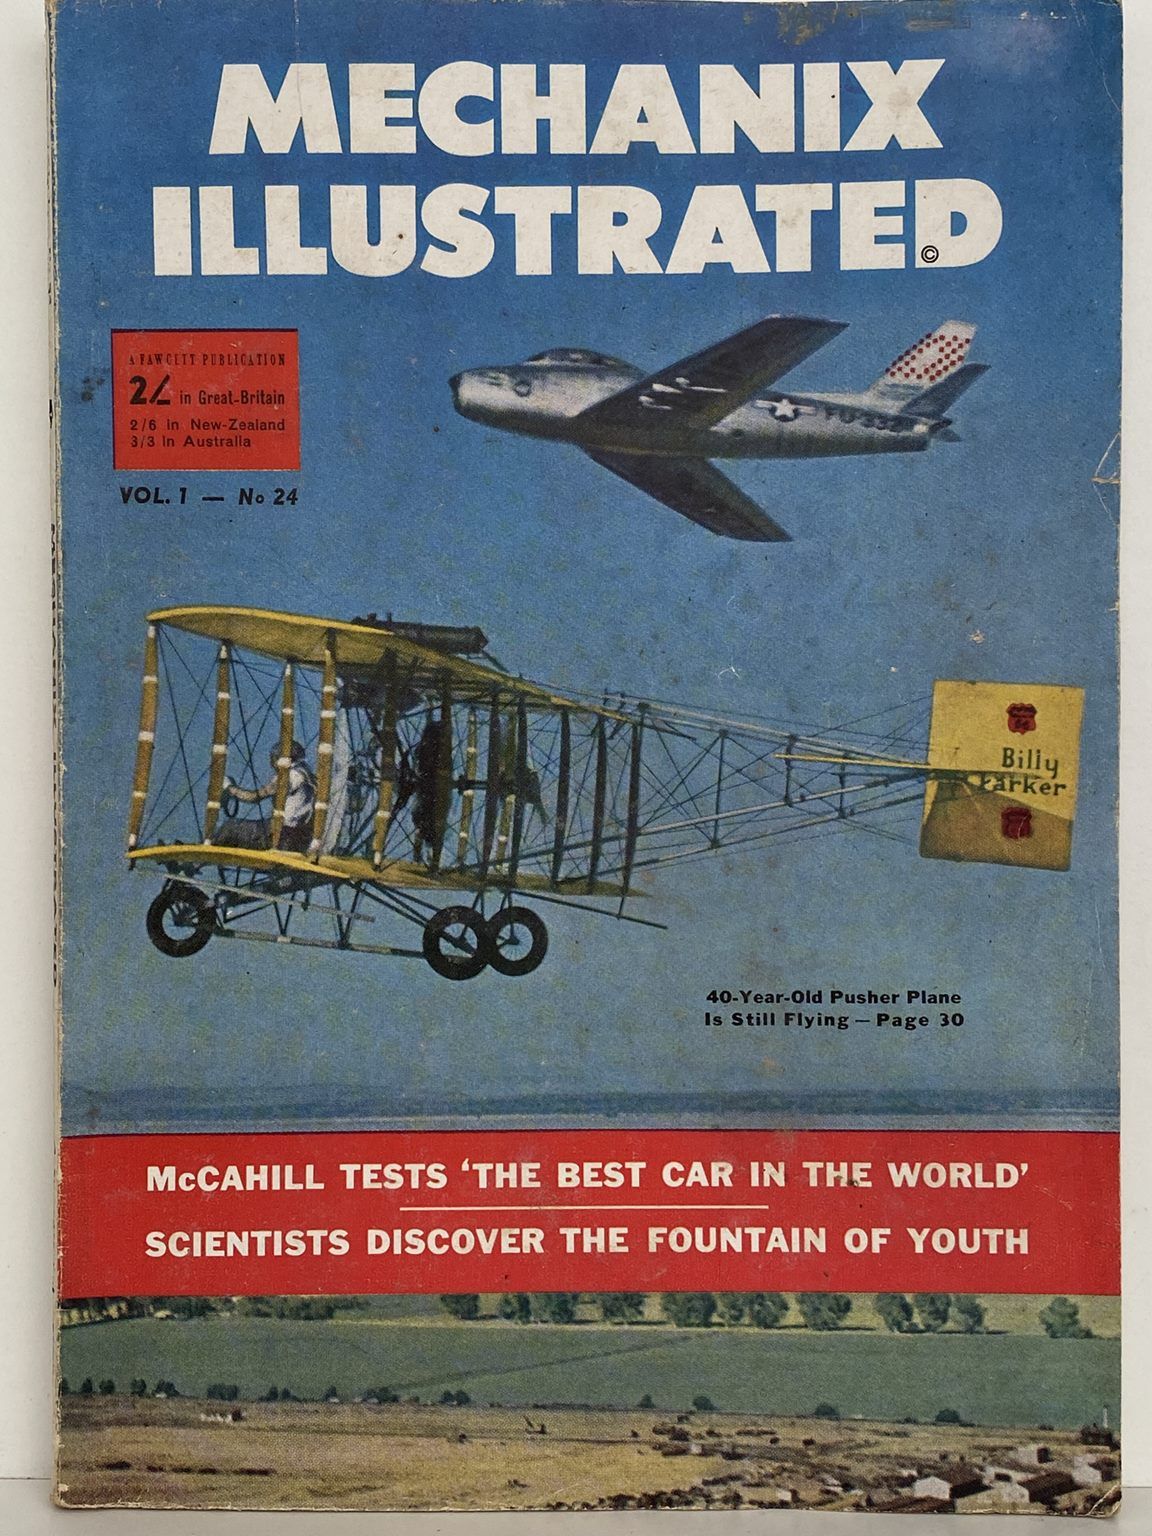 VINTAGE MAGAZINE: Mechanix Illustrated, Vol 1, No. 24 - November 1952